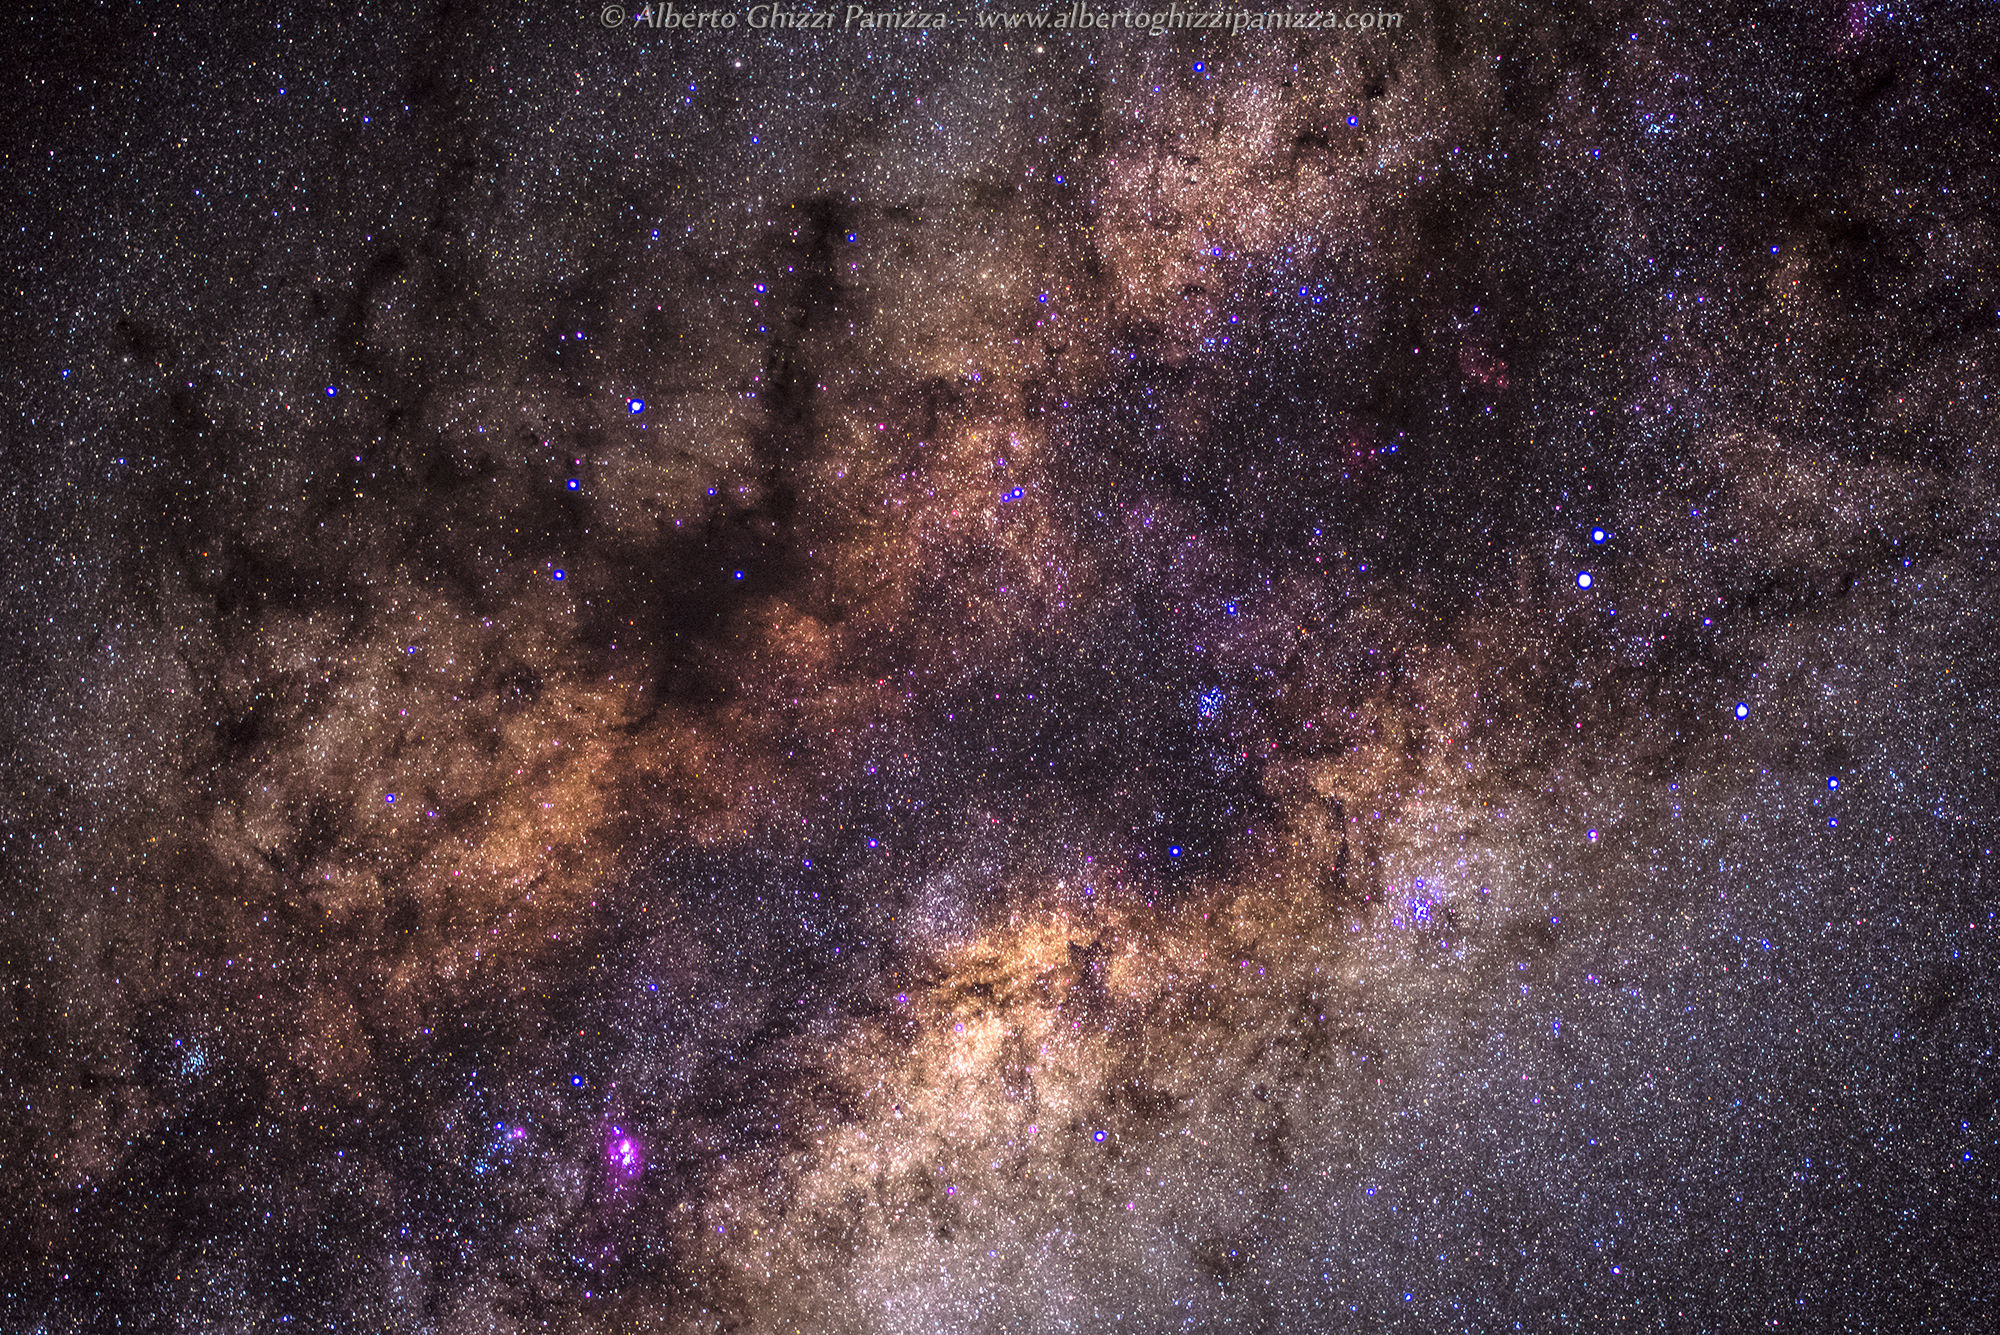 Inside the Milky Way...